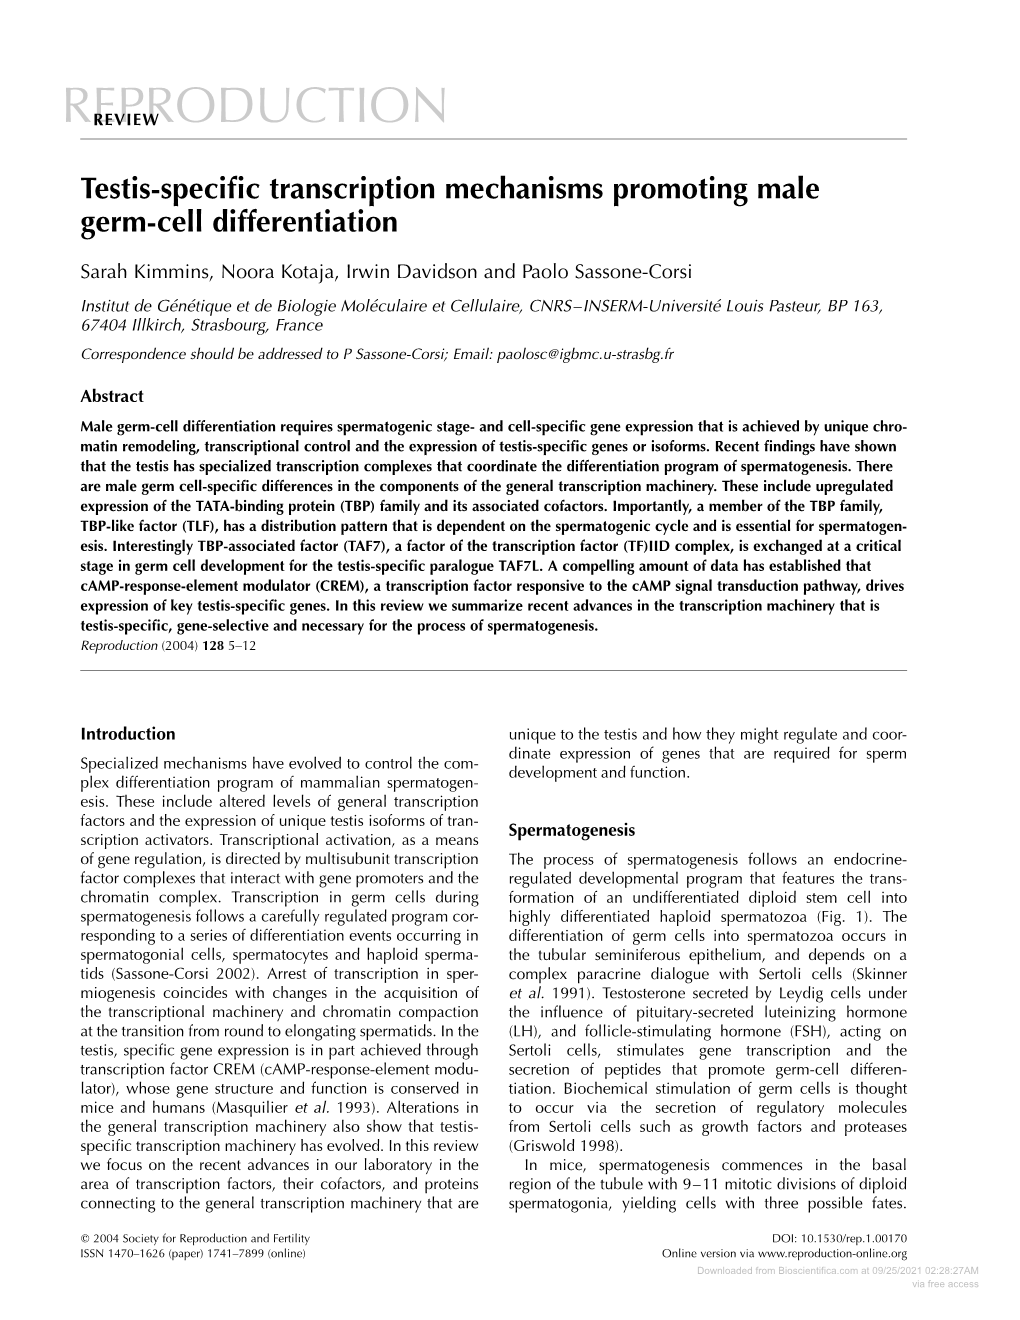 Testis-Specific Transcription Mechanisms Promoting Male Germ